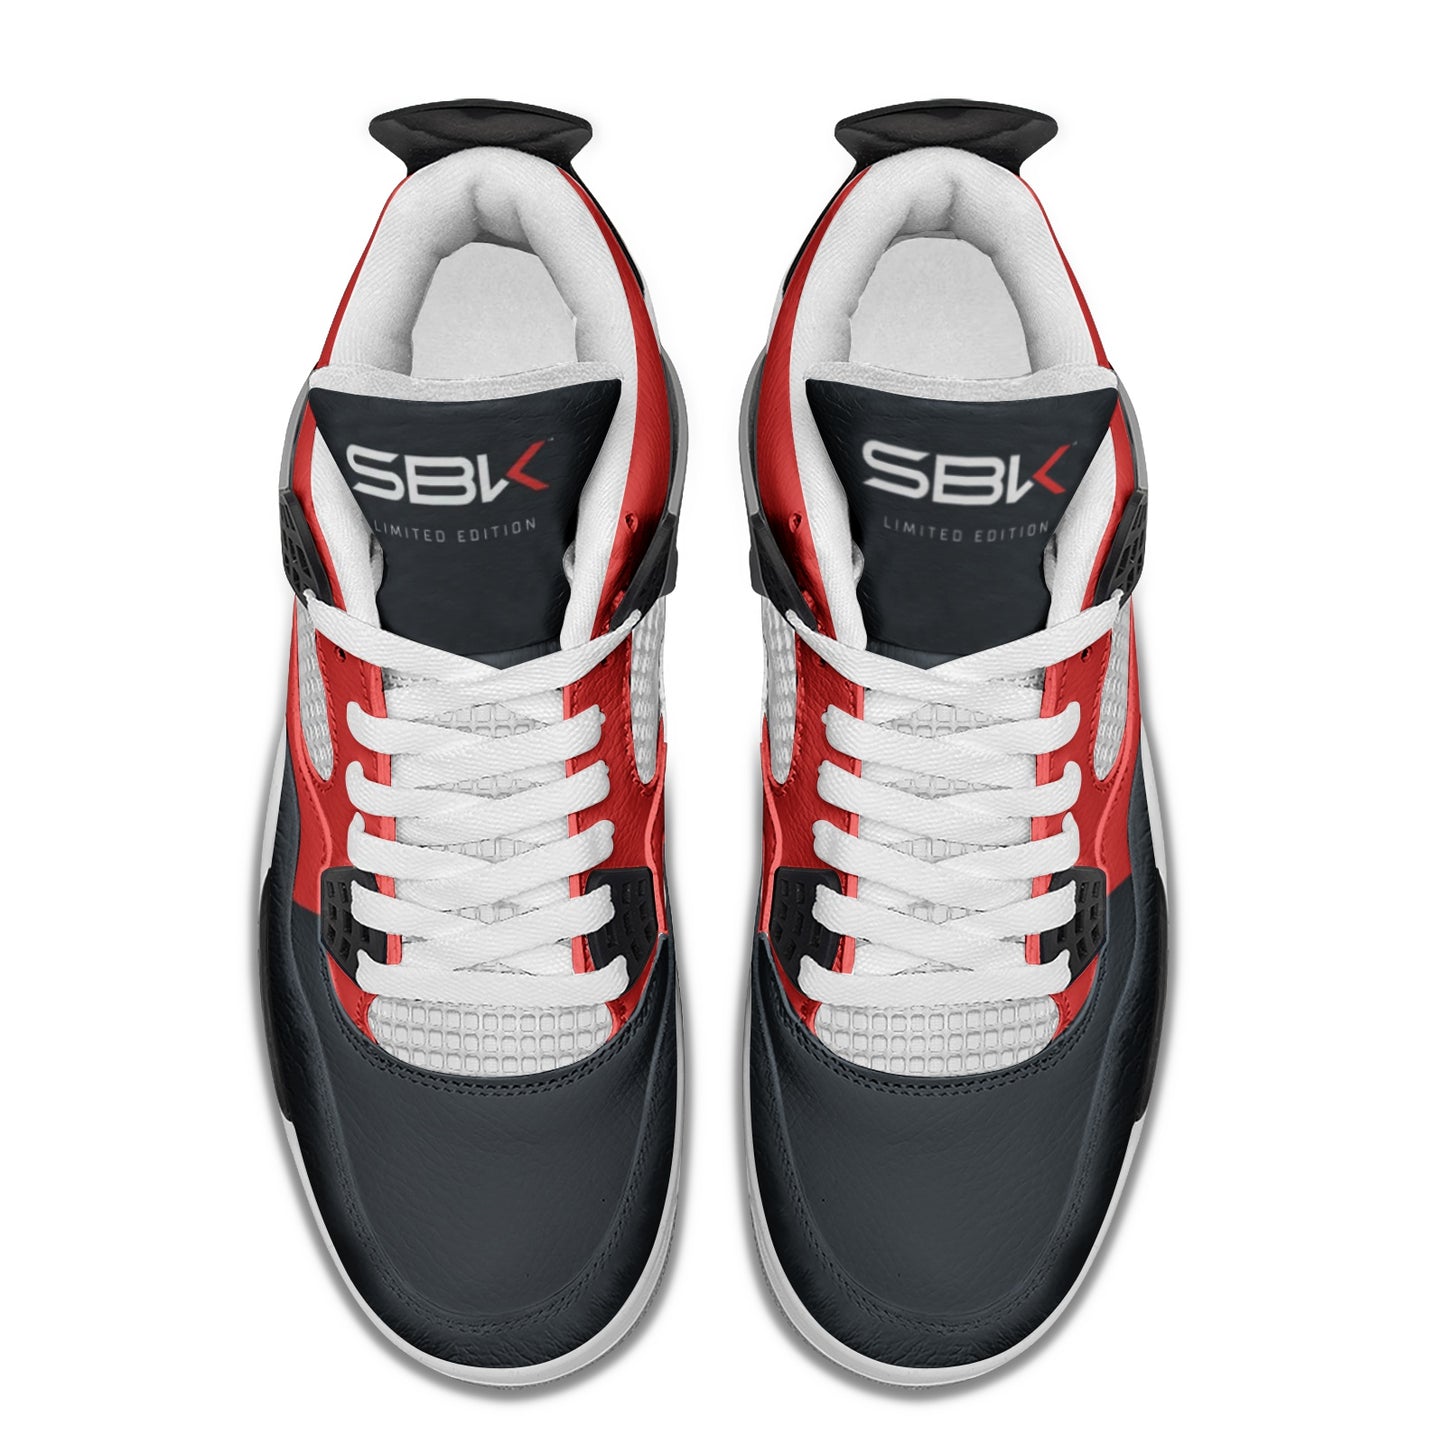 SBK Urban Sneakers